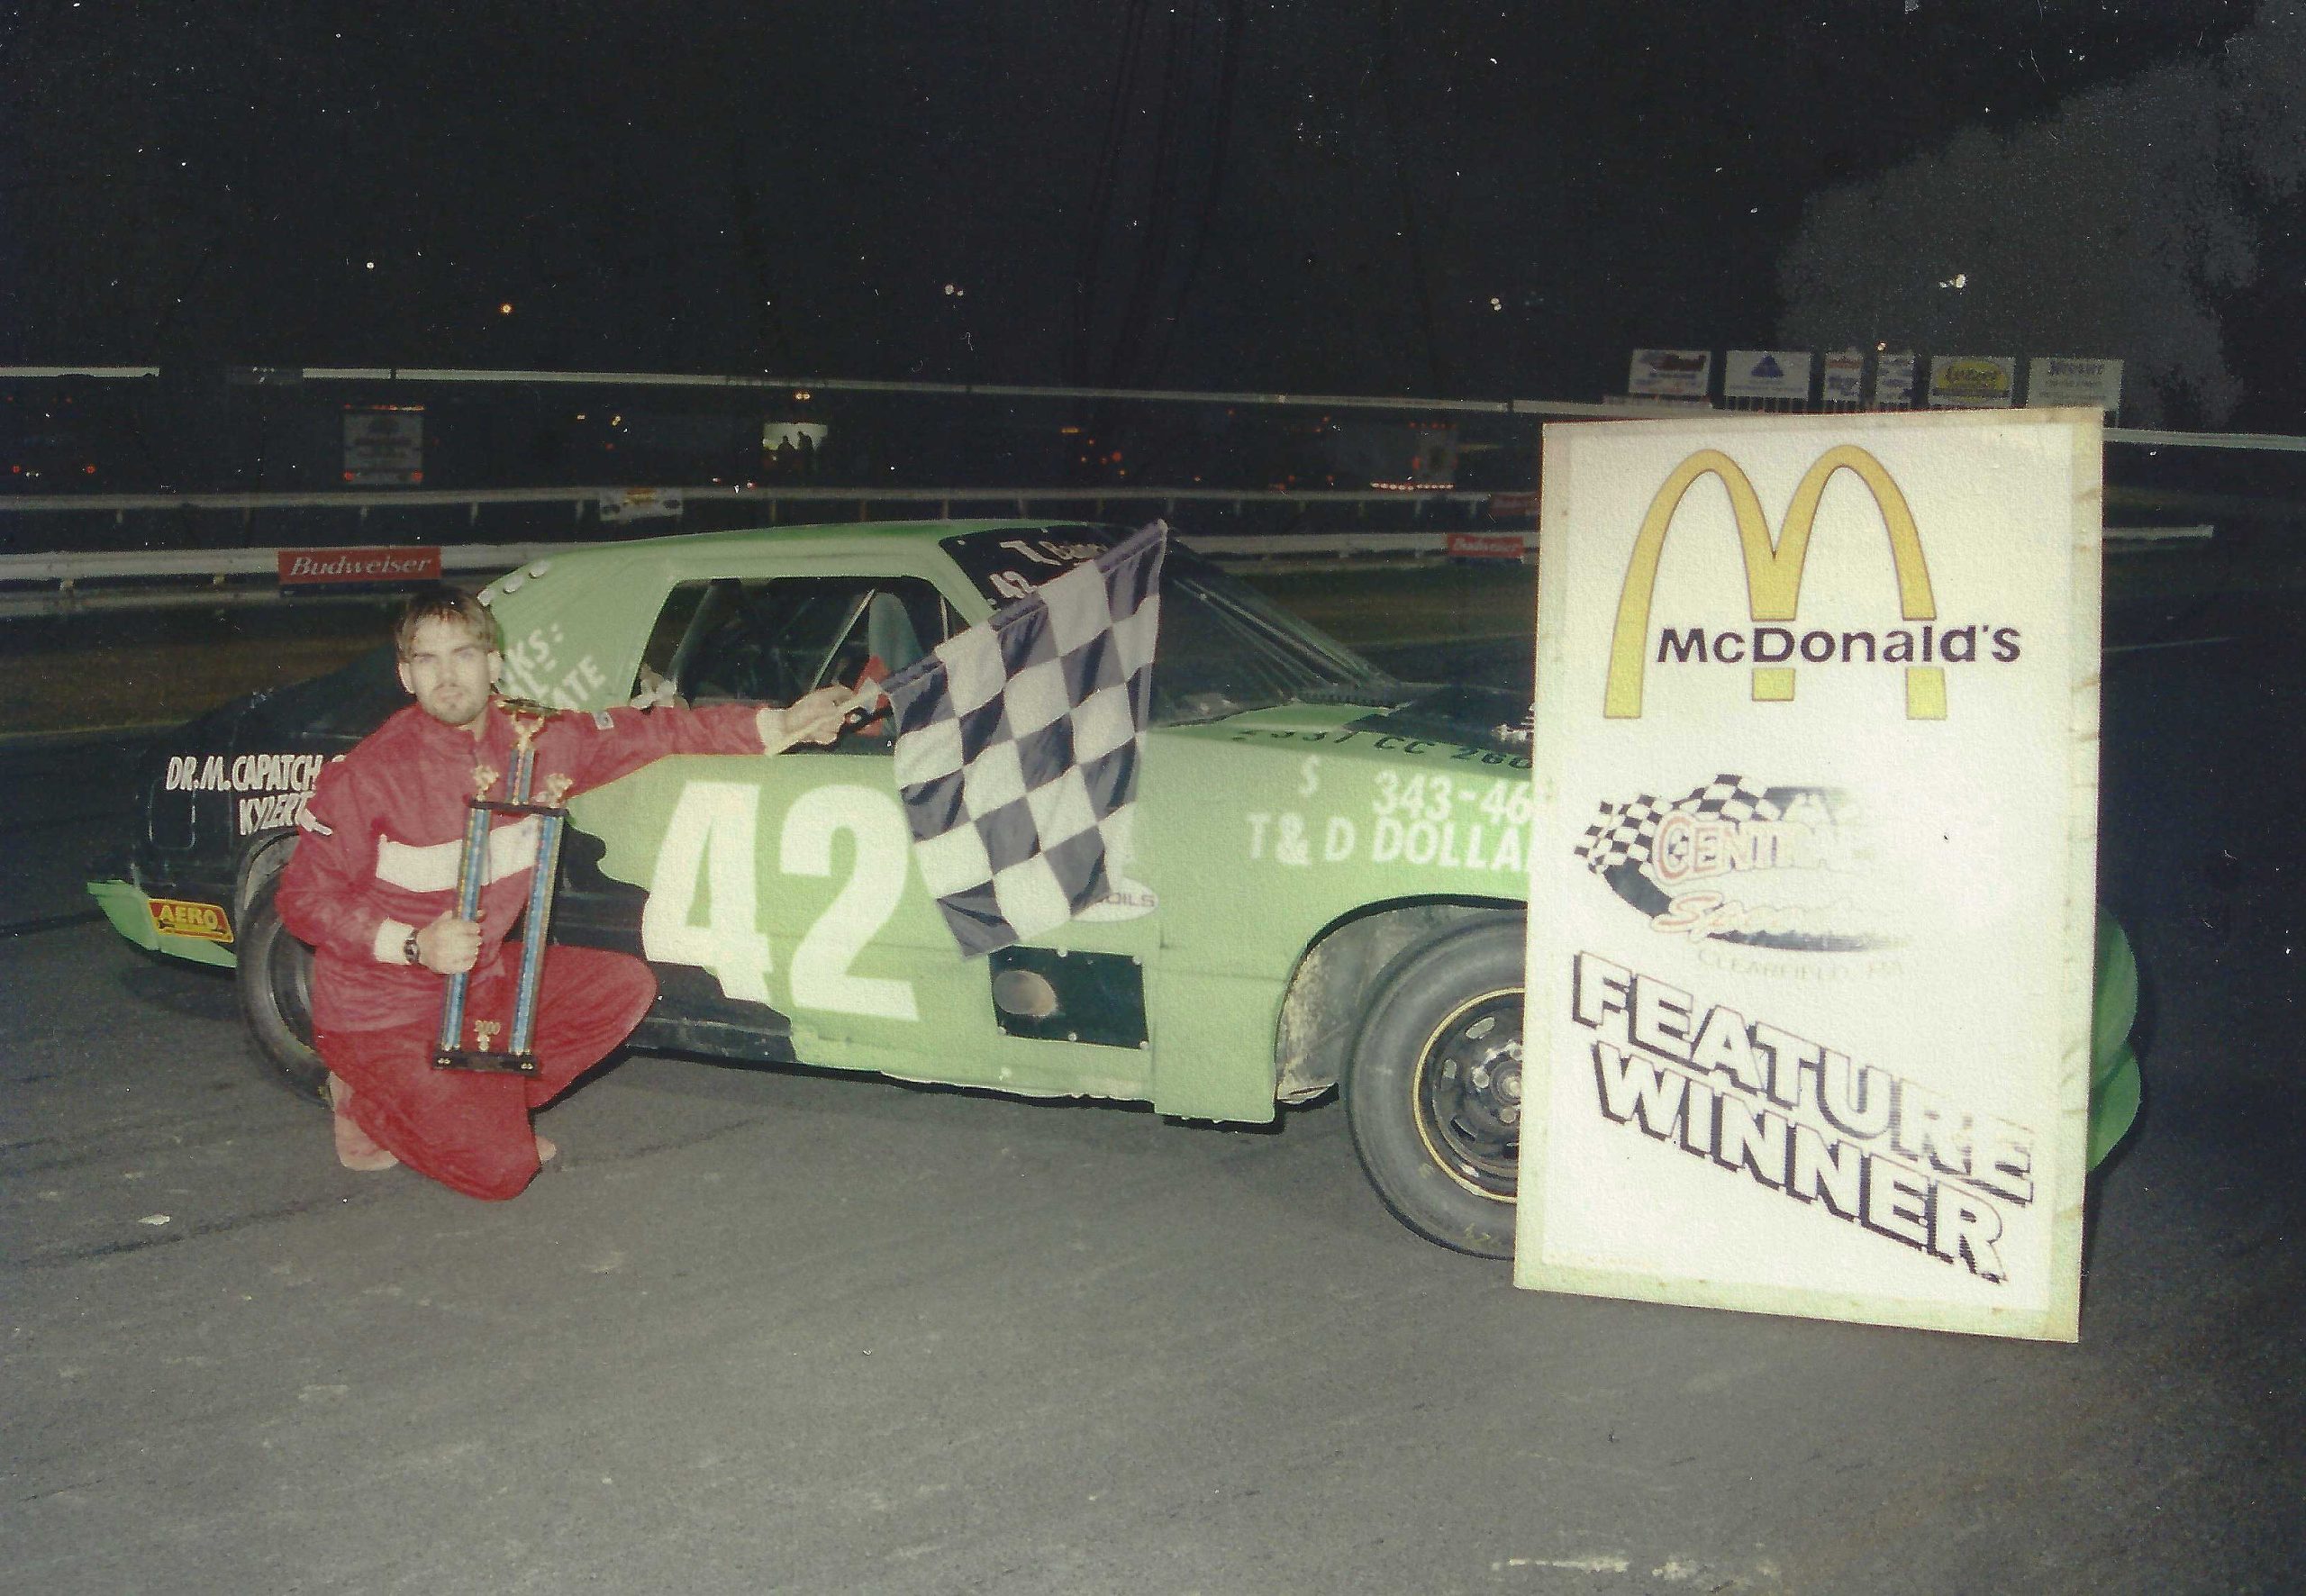 2000, UMI’s future maintenance technician, Corey Timblin wins in his 1986 Ford Mustang.